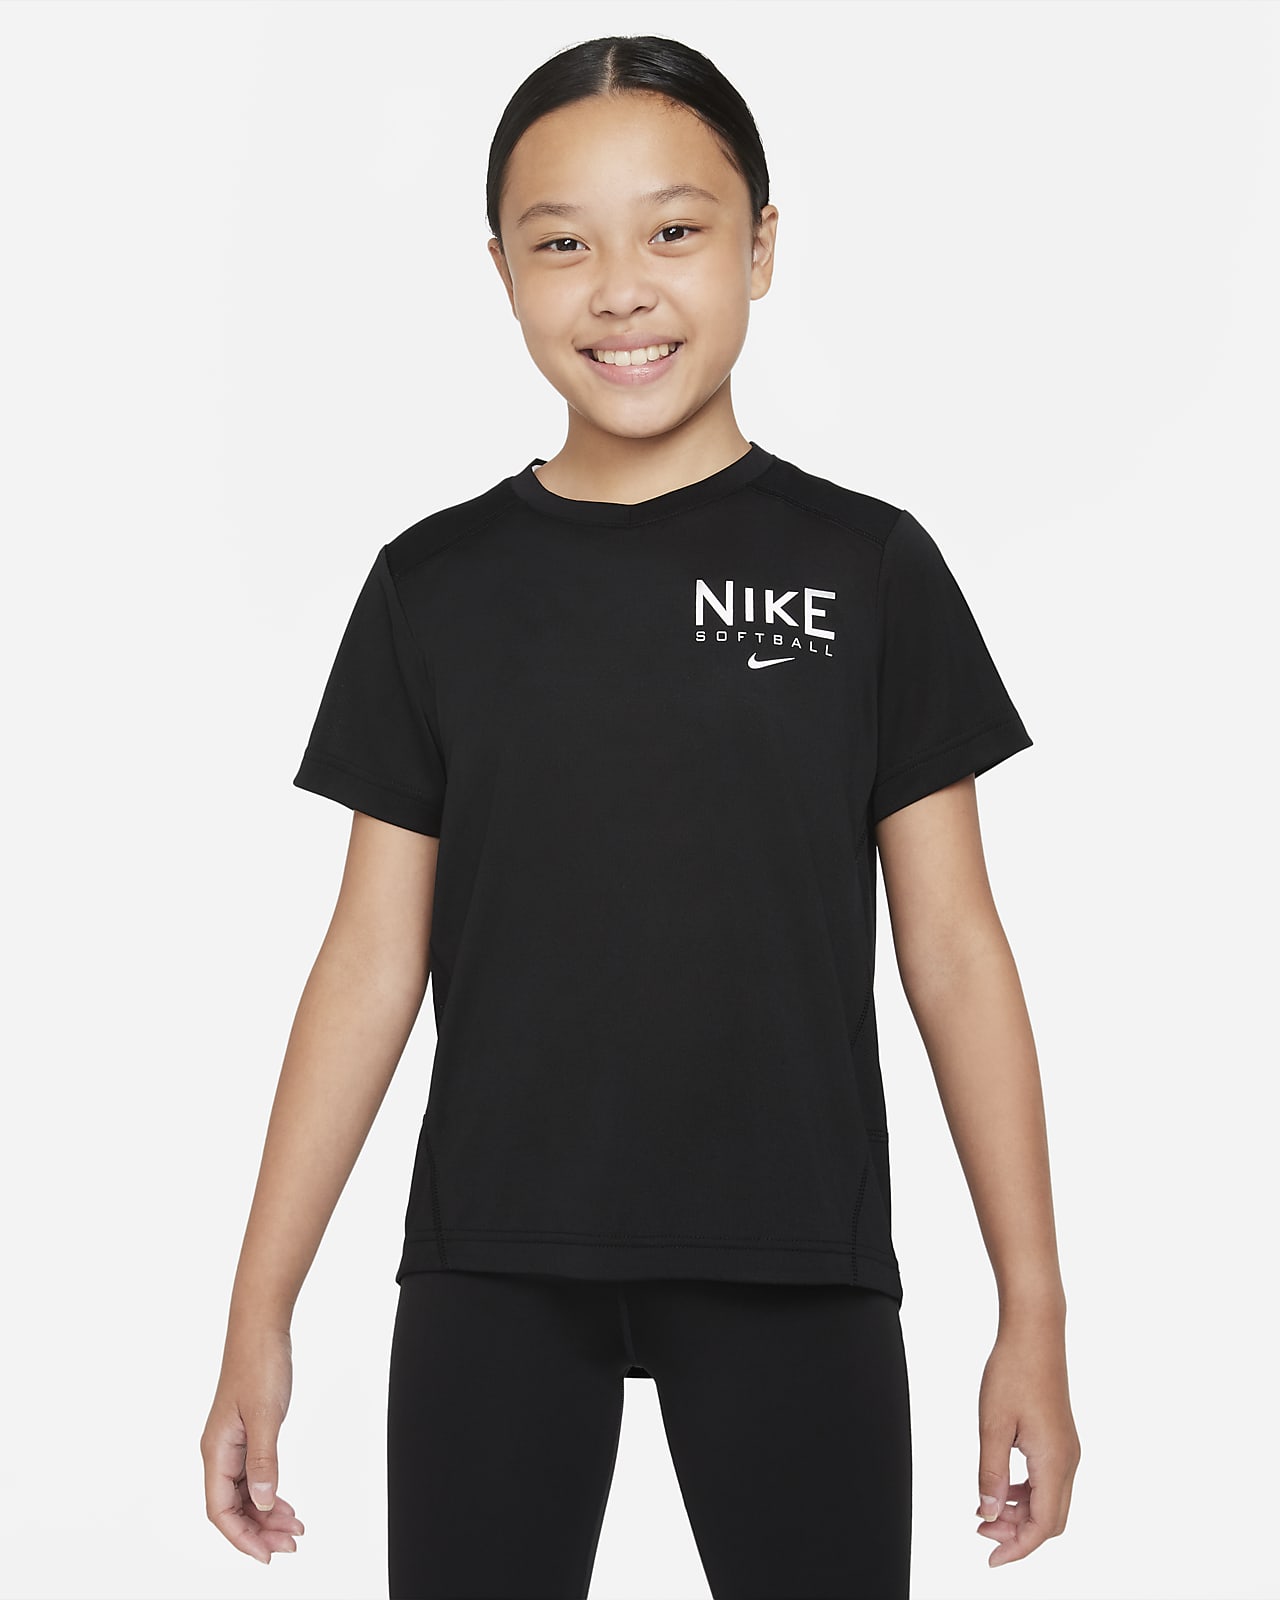 Nike Dri-FIT Practice Big Kids\' (Girls\') Top. Short-Sleeve Softball